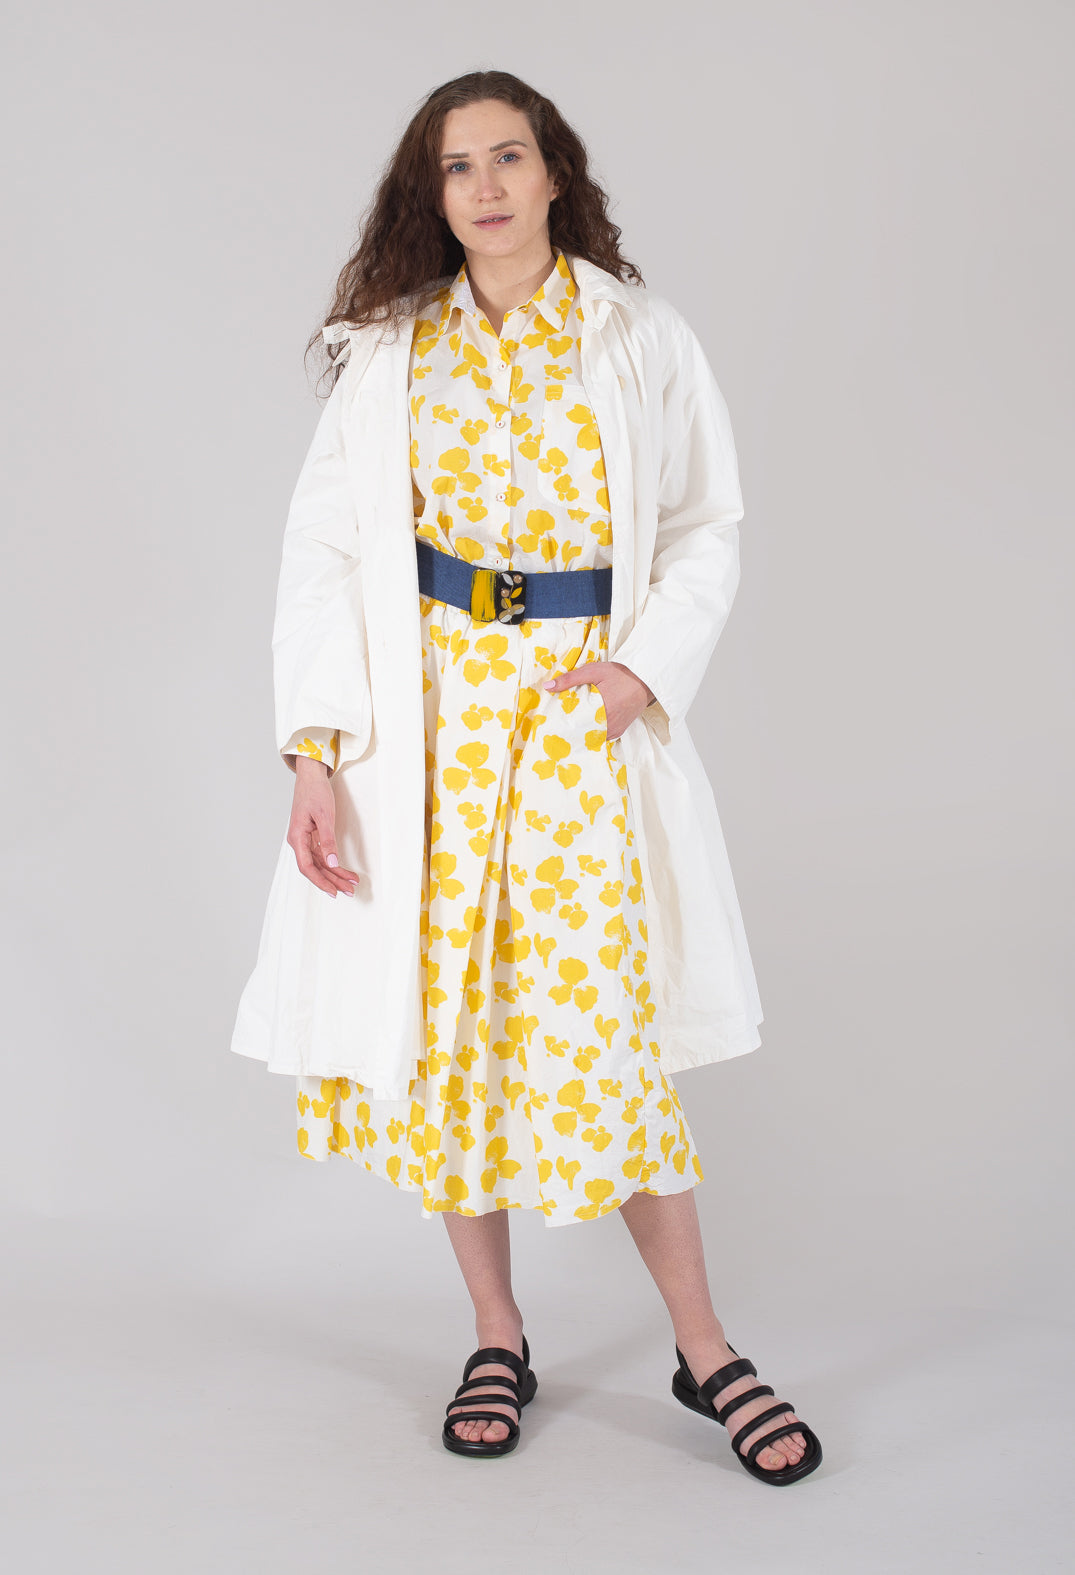 Printed Jenna Skirt in Yellow Flowers